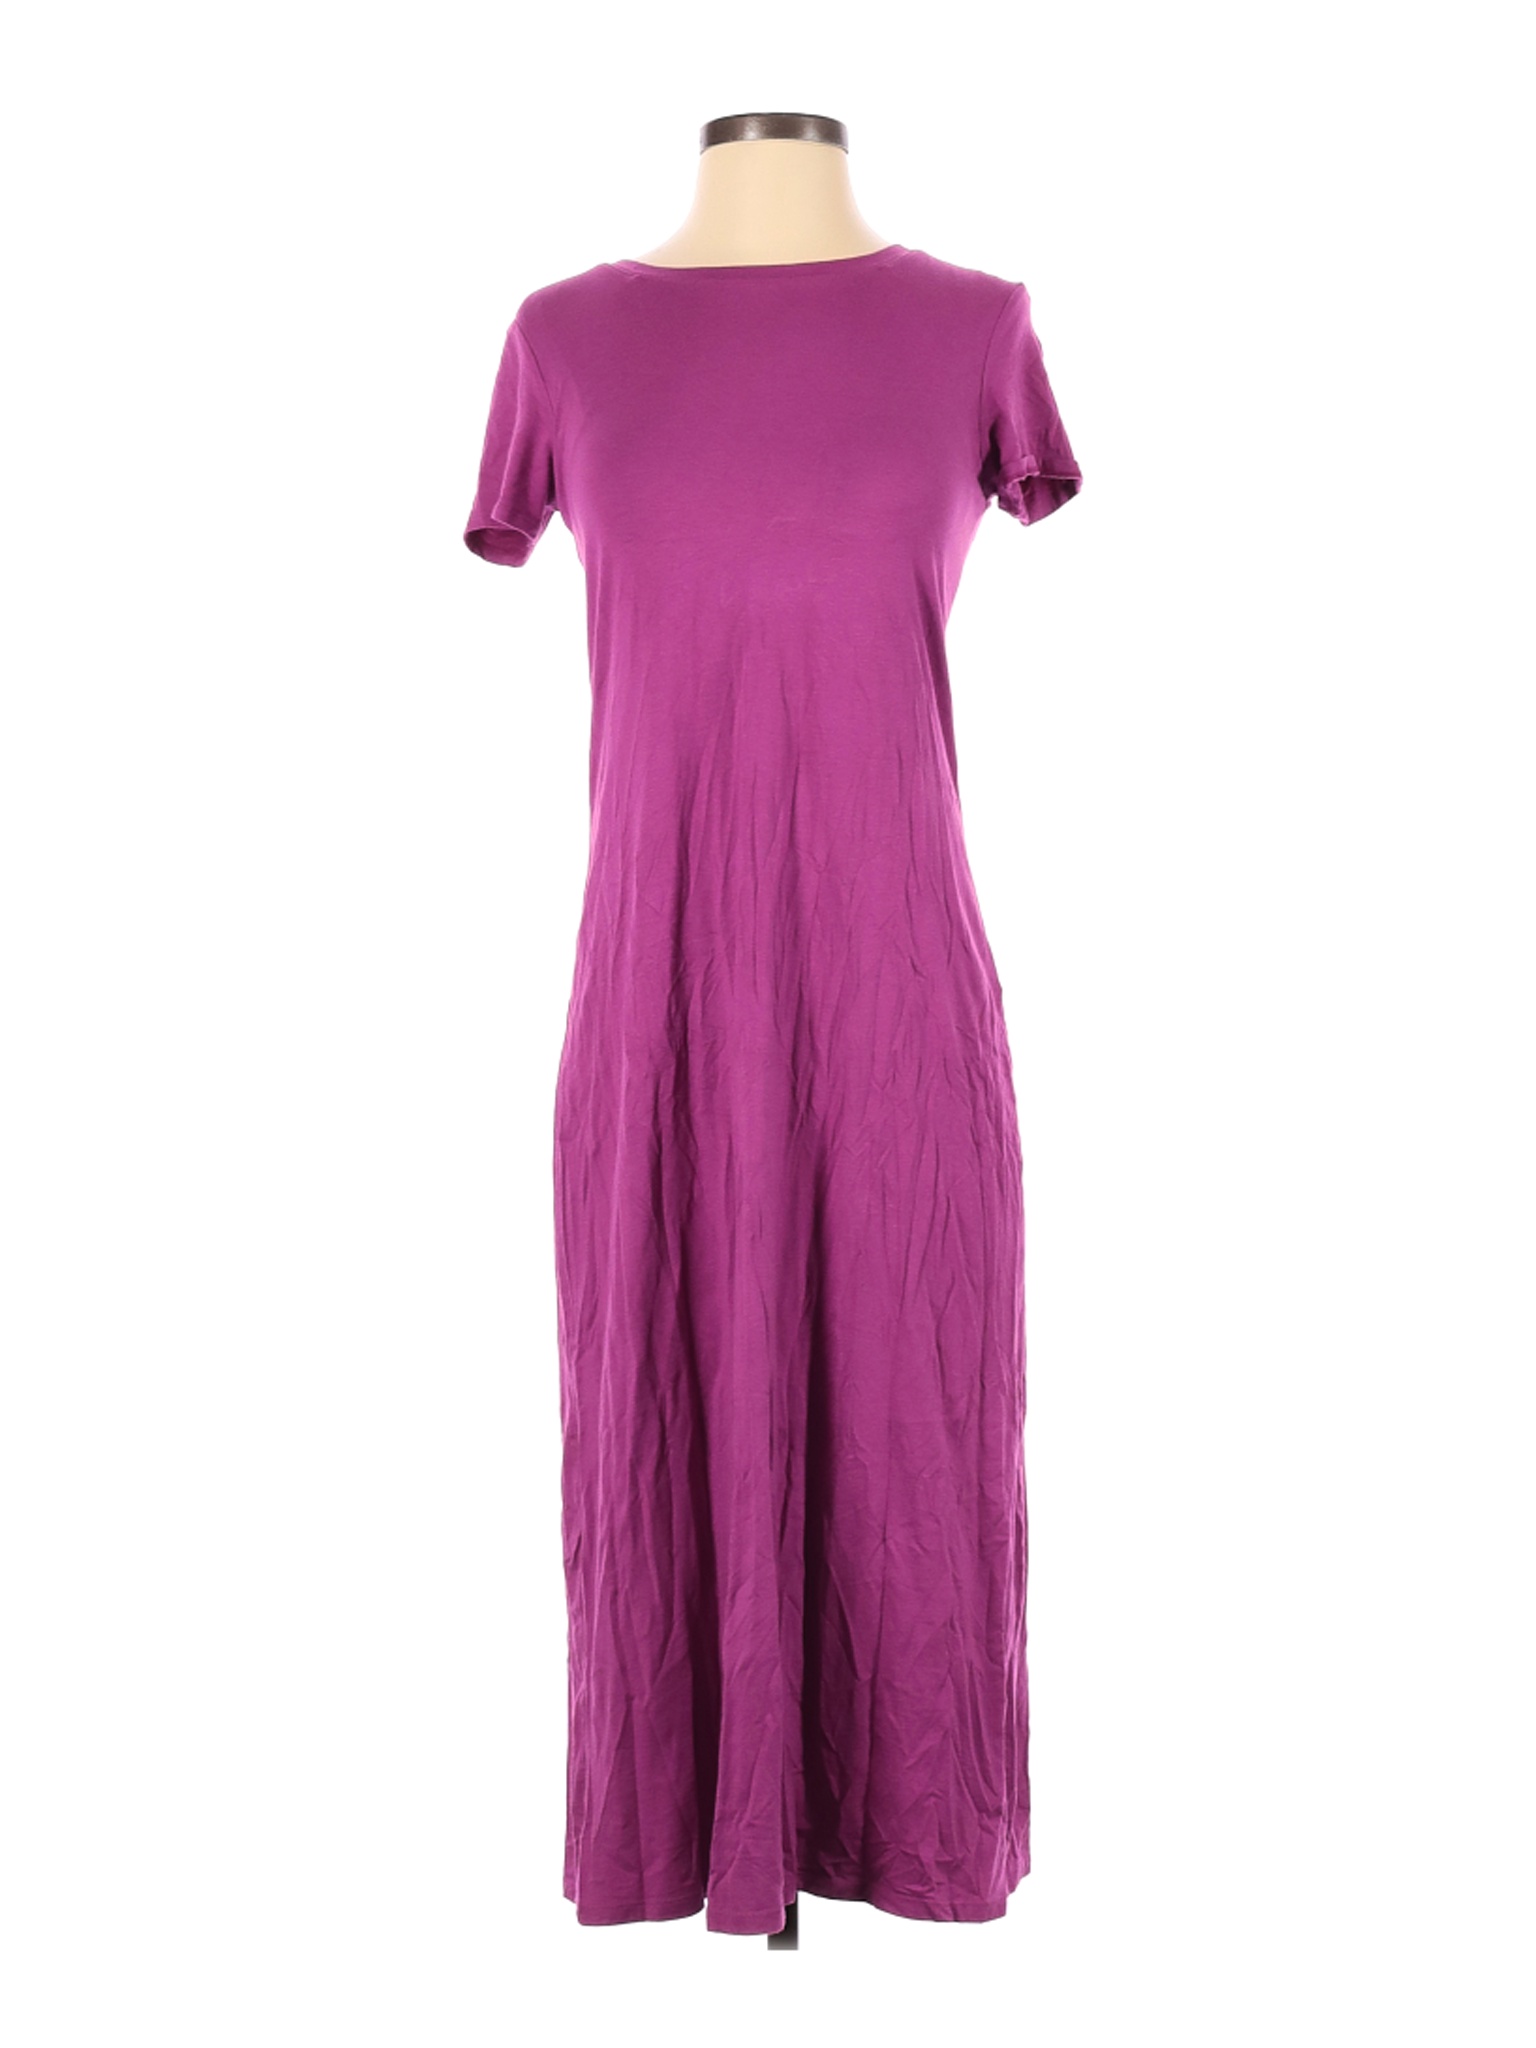 Uniqlo Women Purple Casual Dress S | eBay